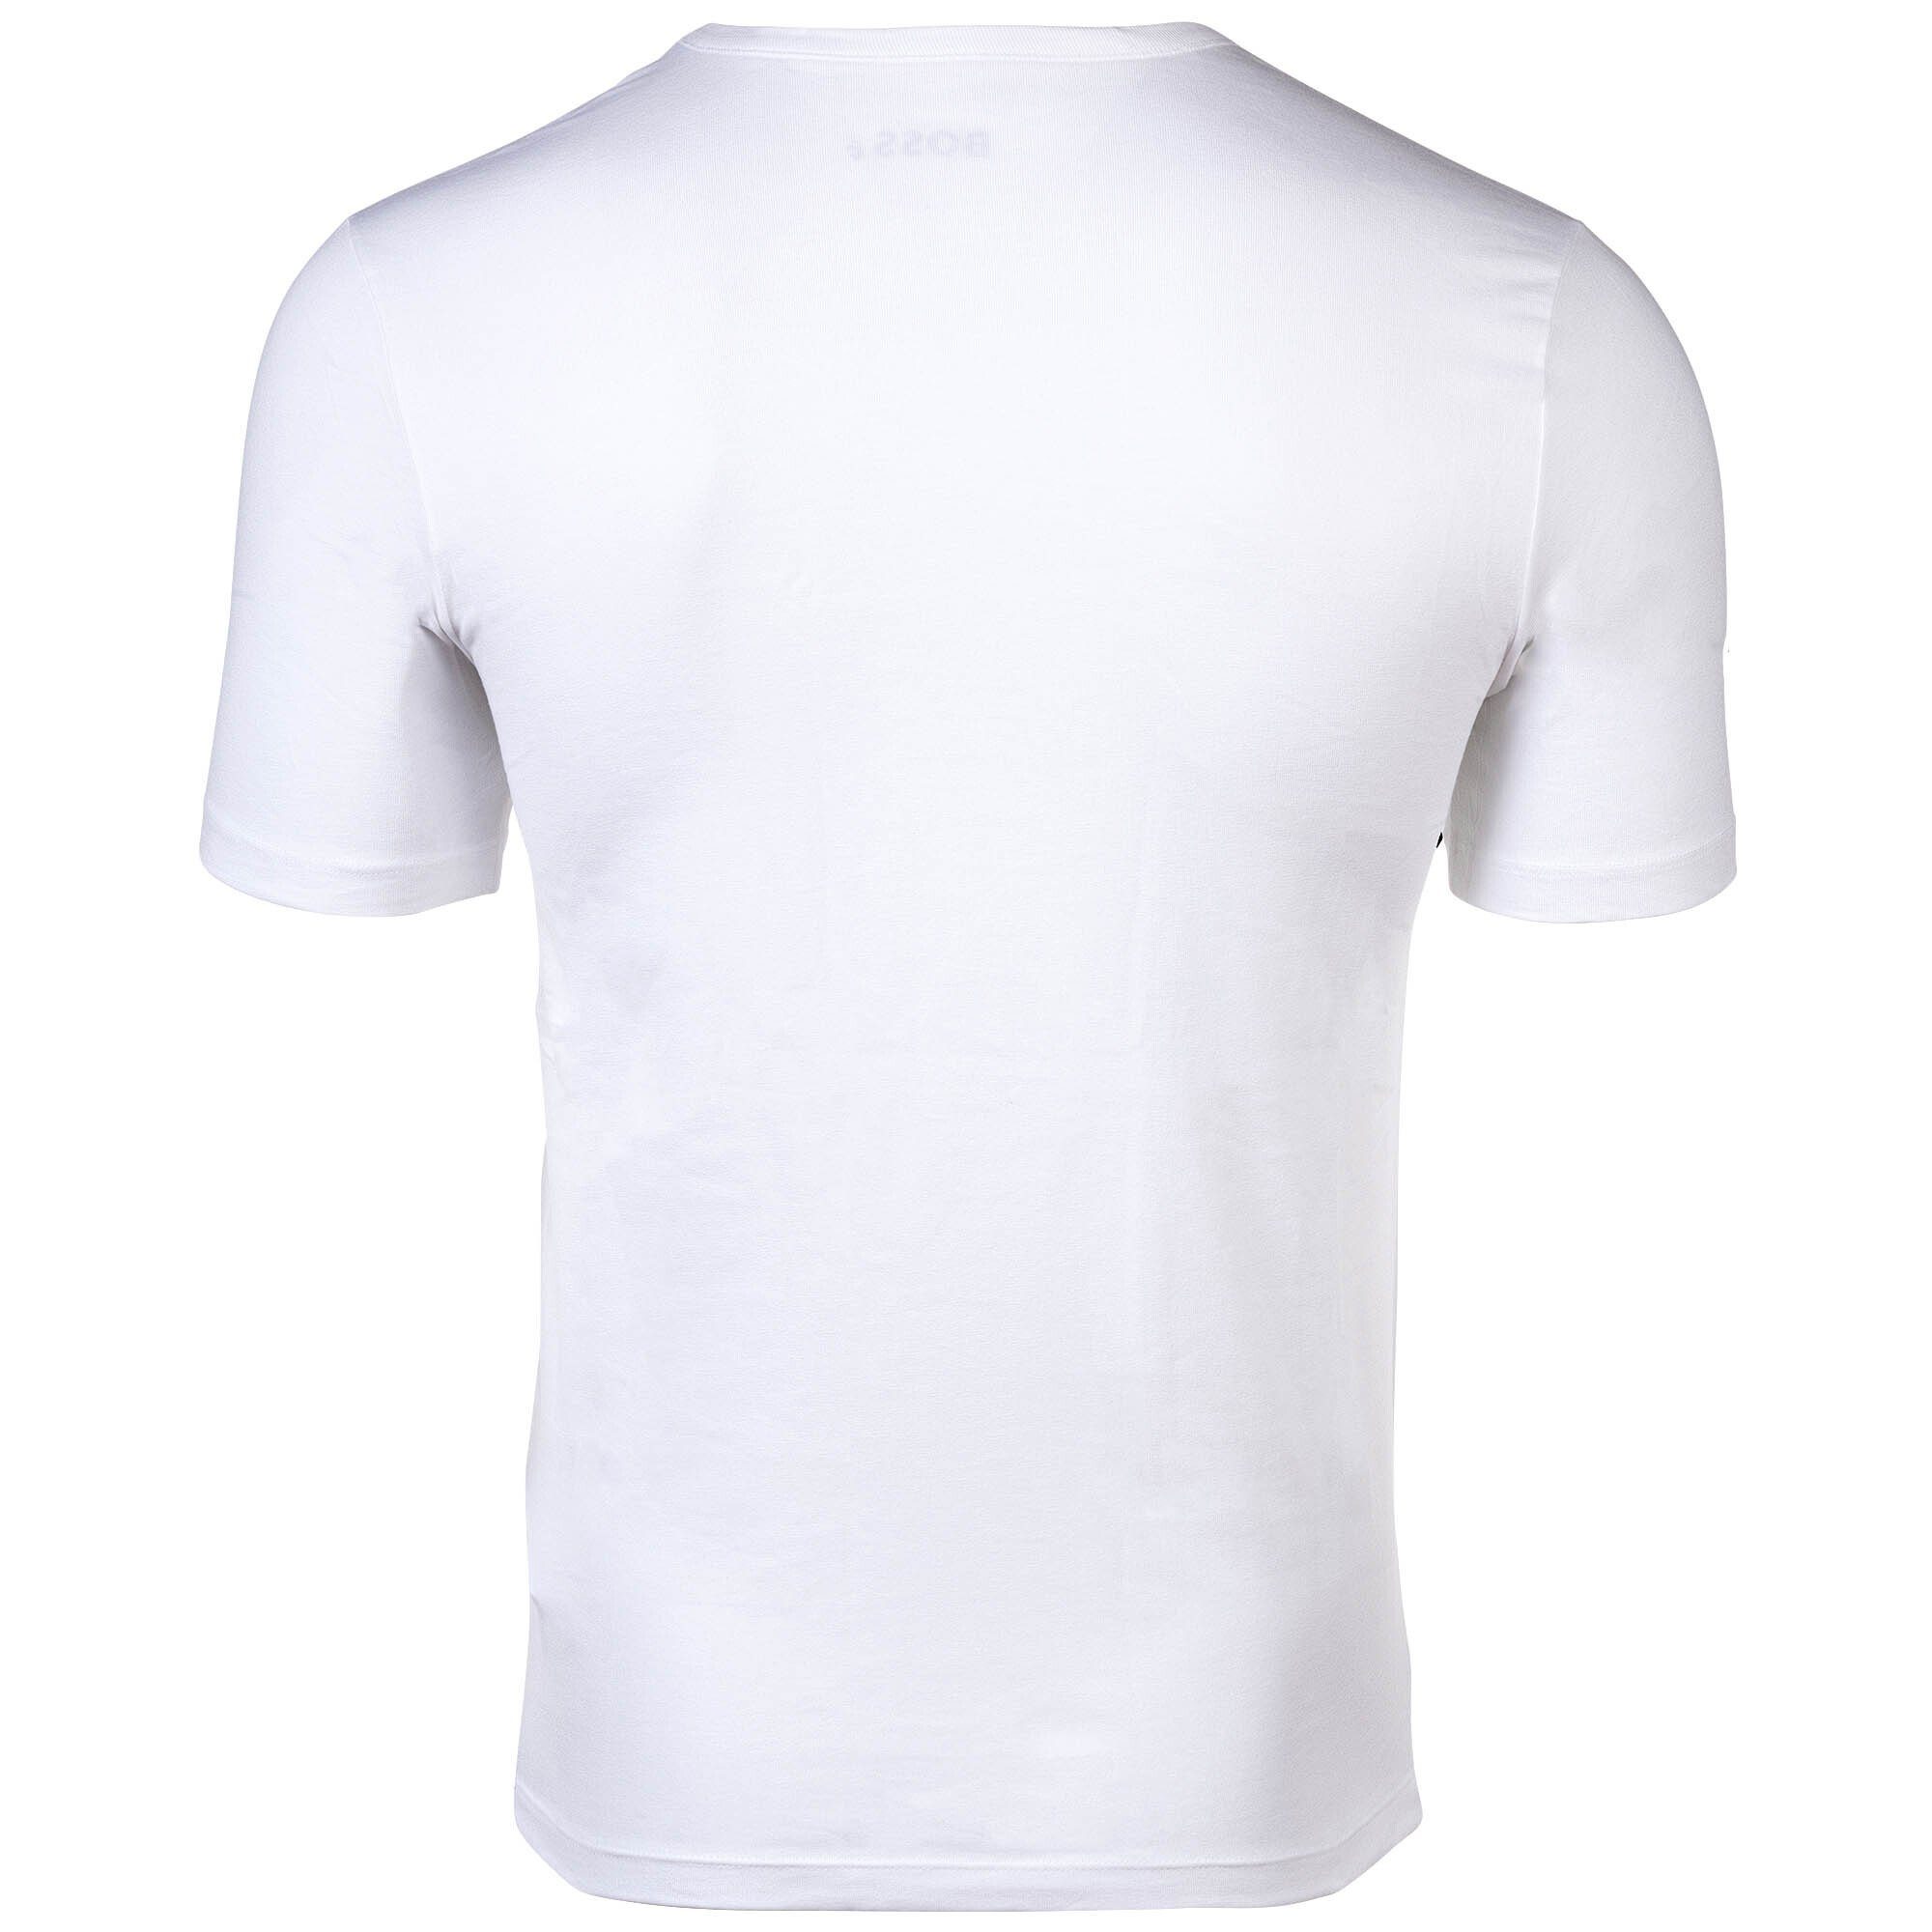 Rundhals RN Classic, BOSS - Pack 6er Schwarz/Blau/Weiß Herren T-Shirt T-Shirt,